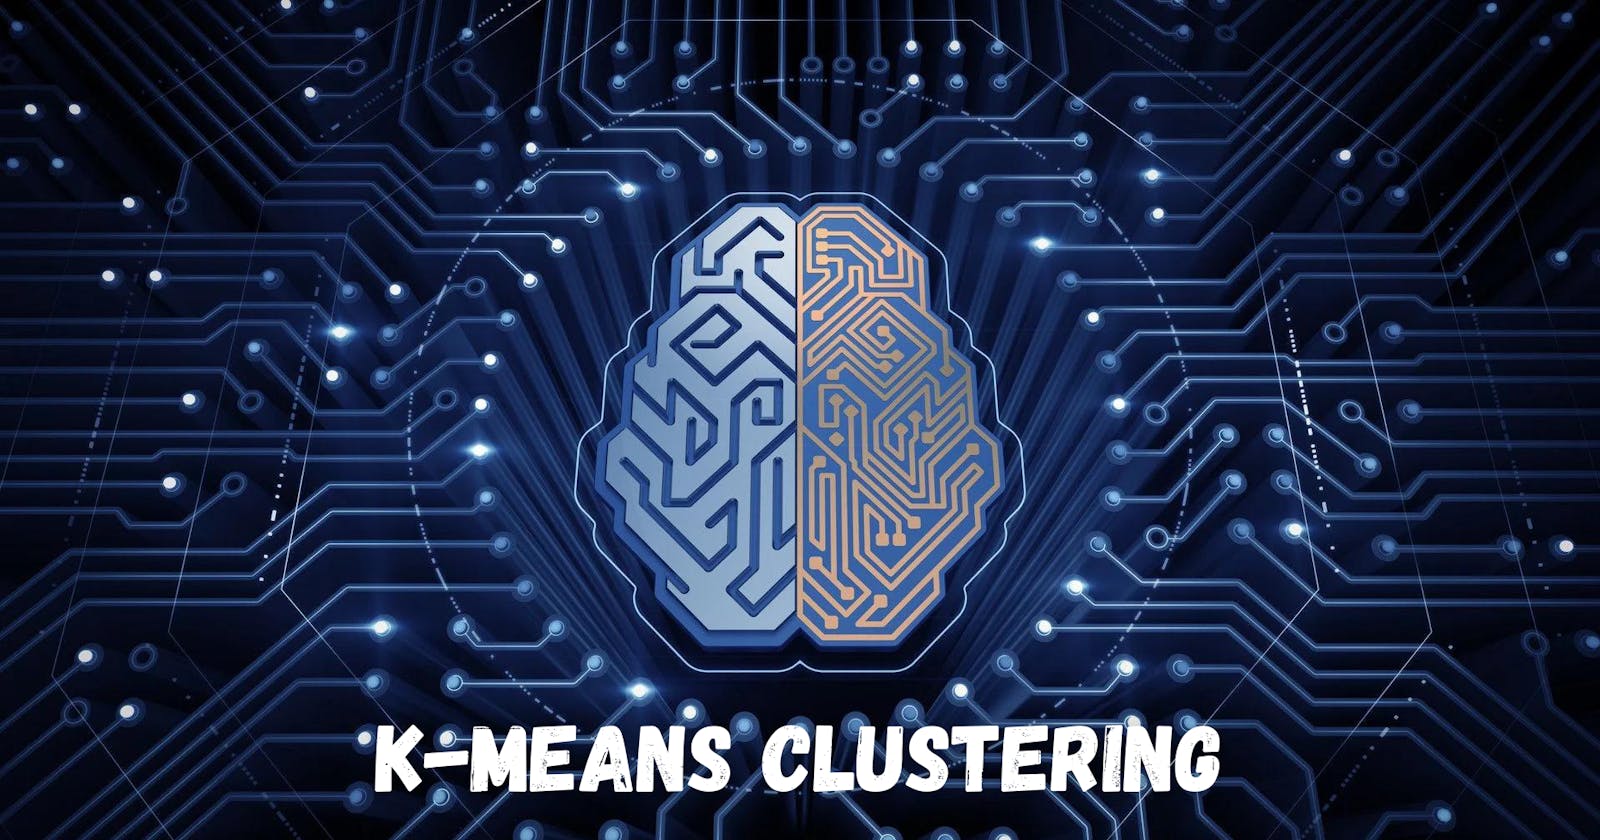 K-means Clustering